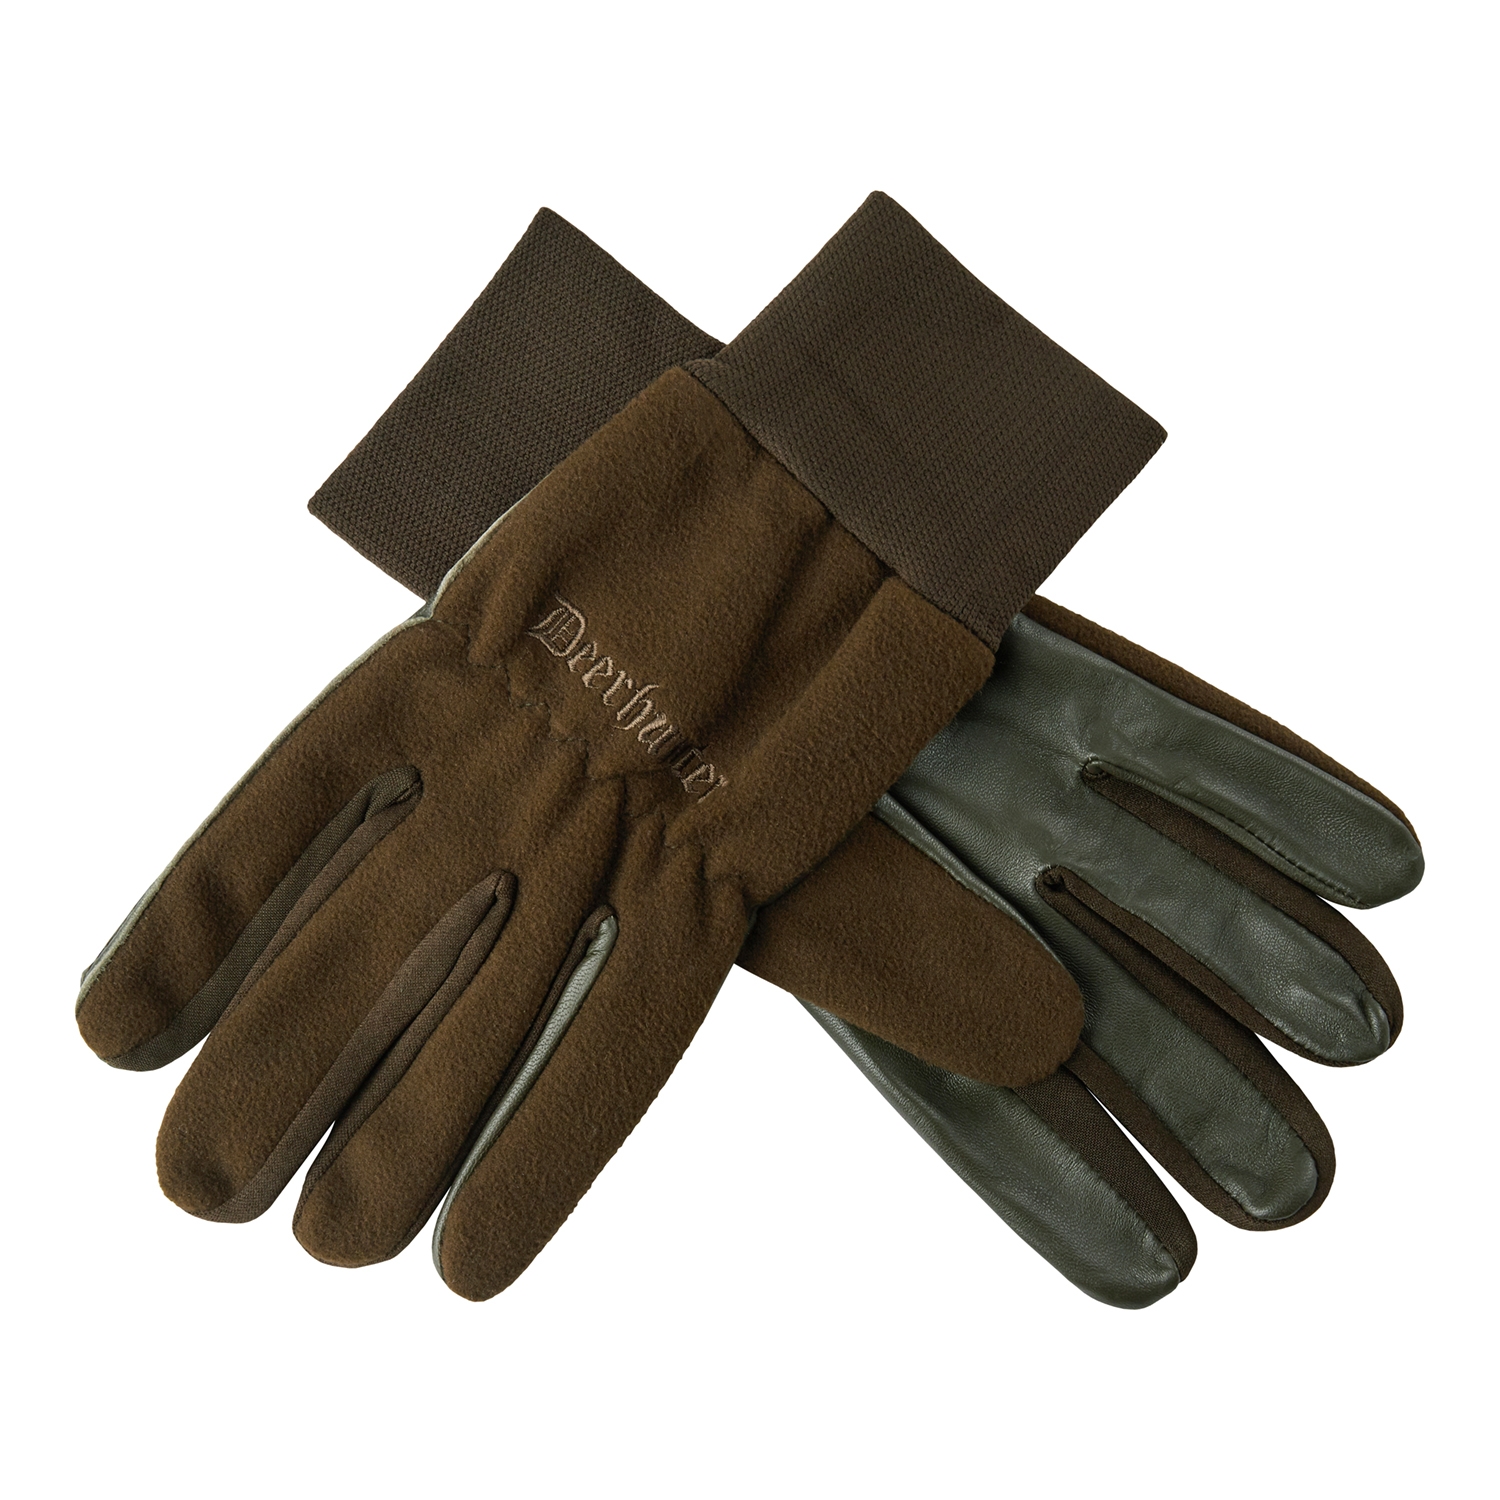 Deerhunter Fleece Gloves with Leather Palm